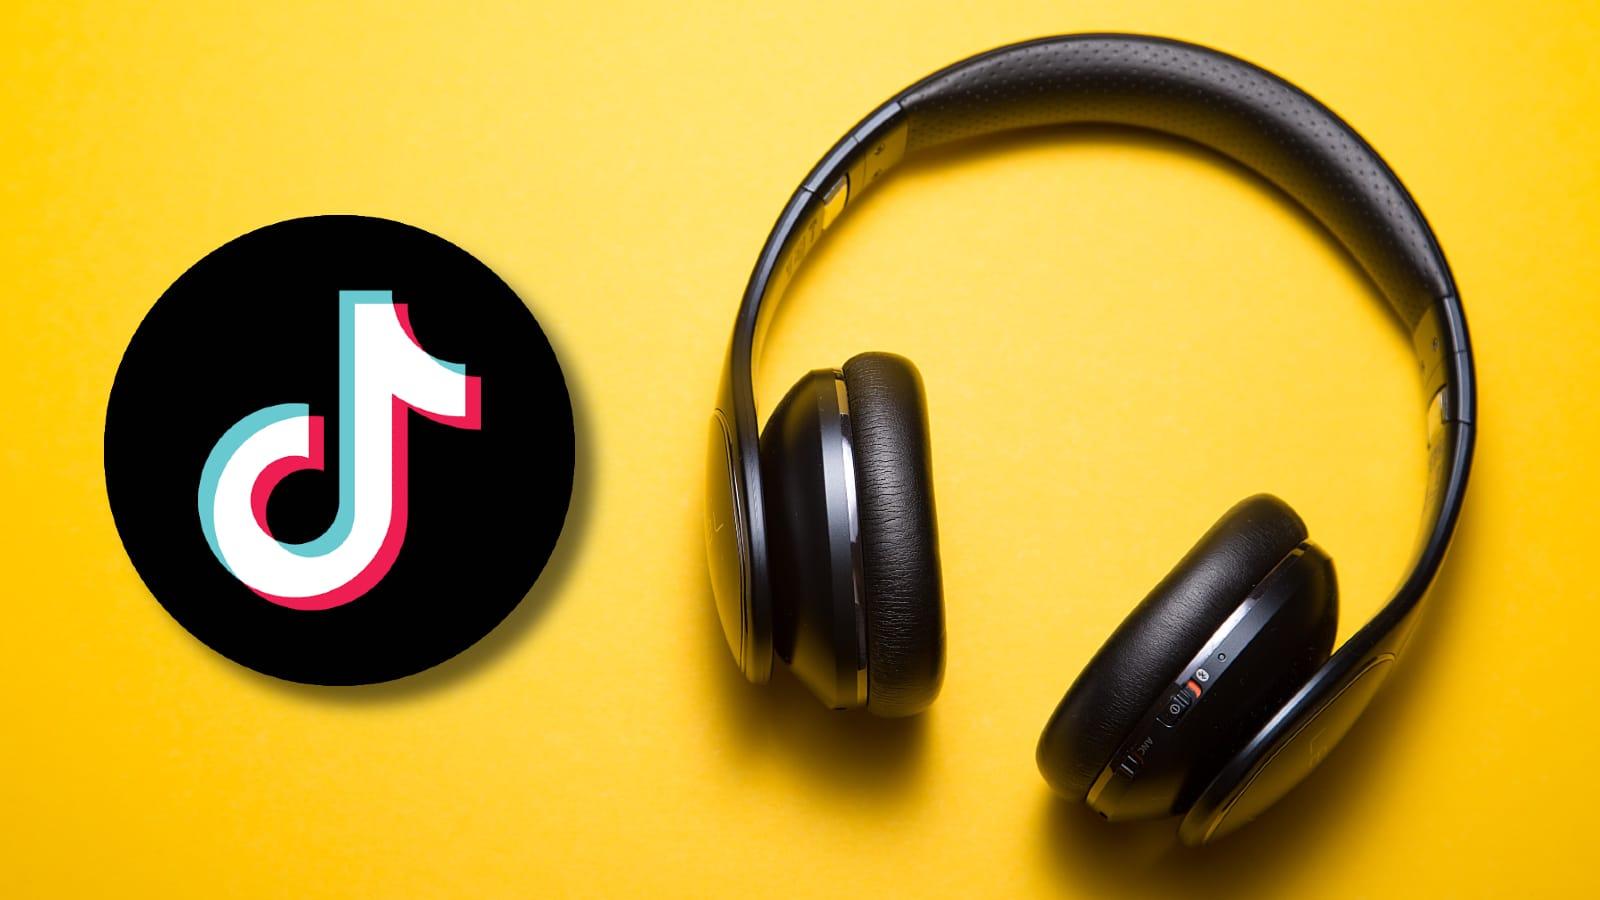 Headphones next to the TikTok logo